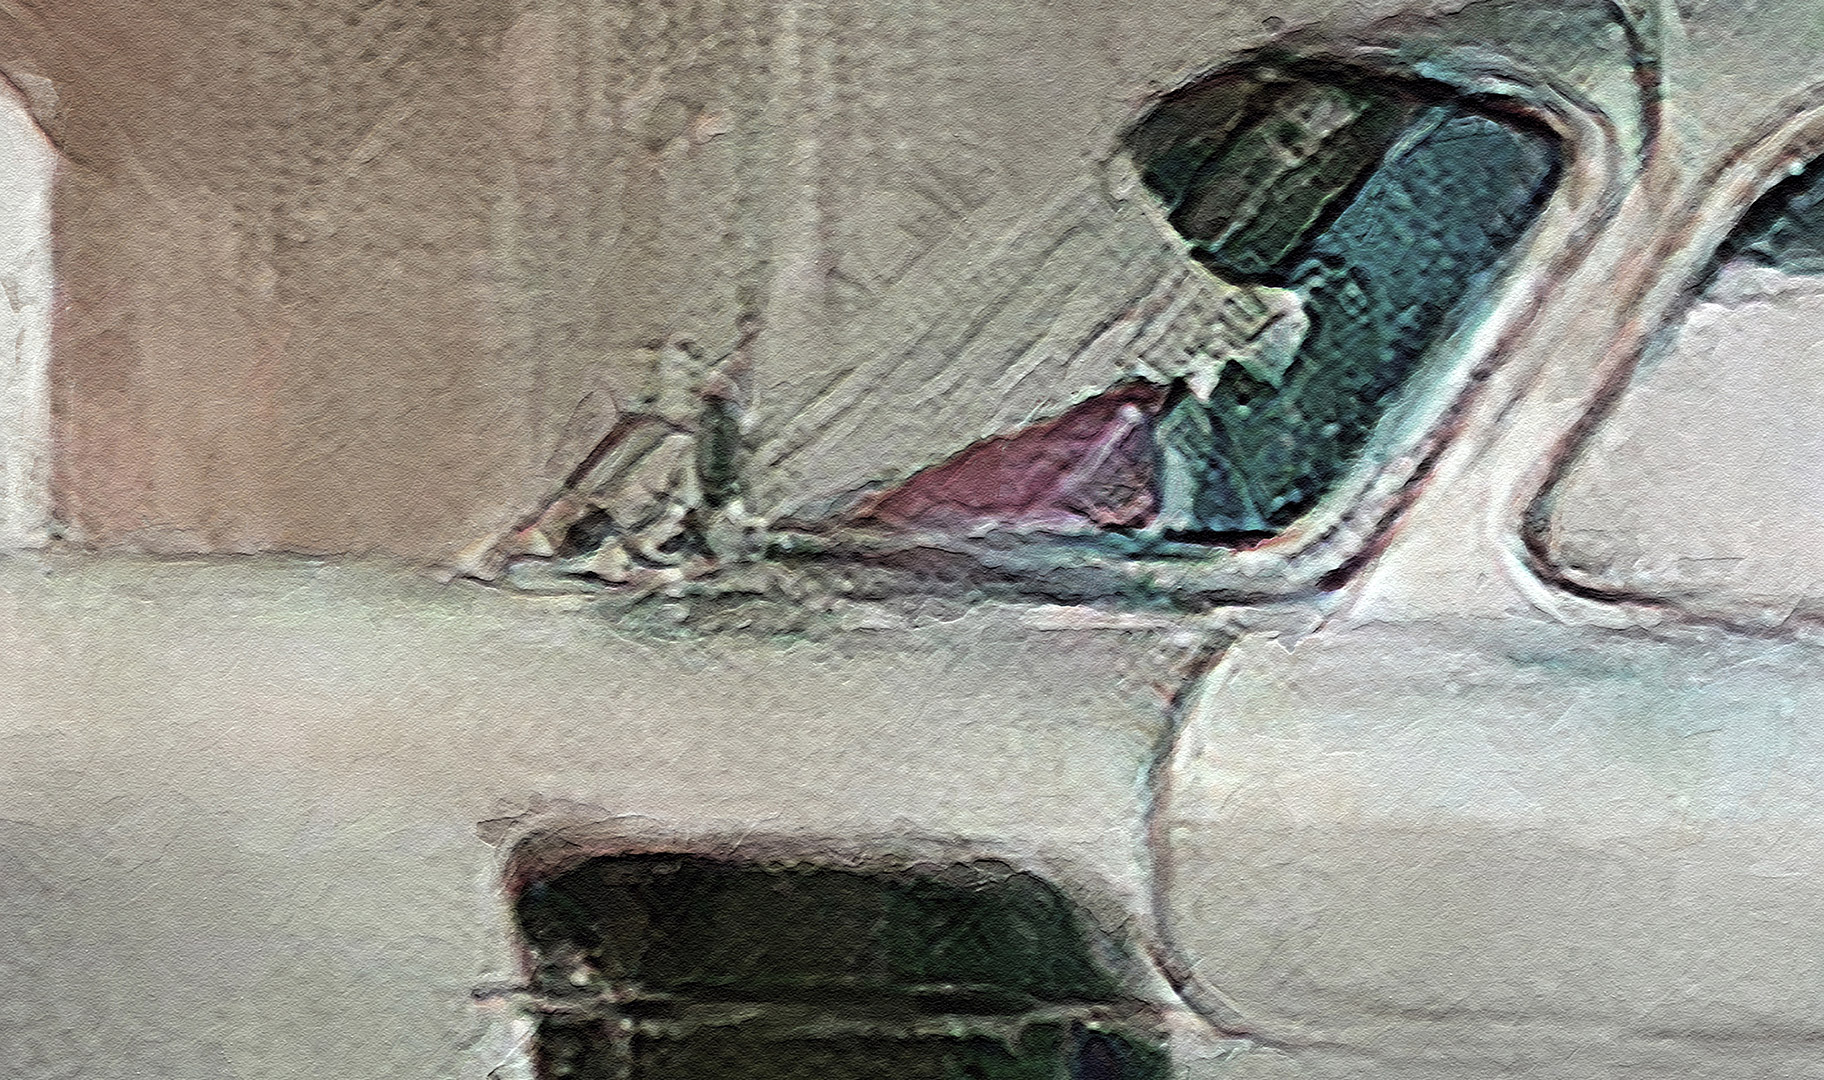 Classic-cars-wallpaper-1955-mercedes-benz-slr-oldtimer-tapete-graeflich-muenstersche-manufaktur (3)